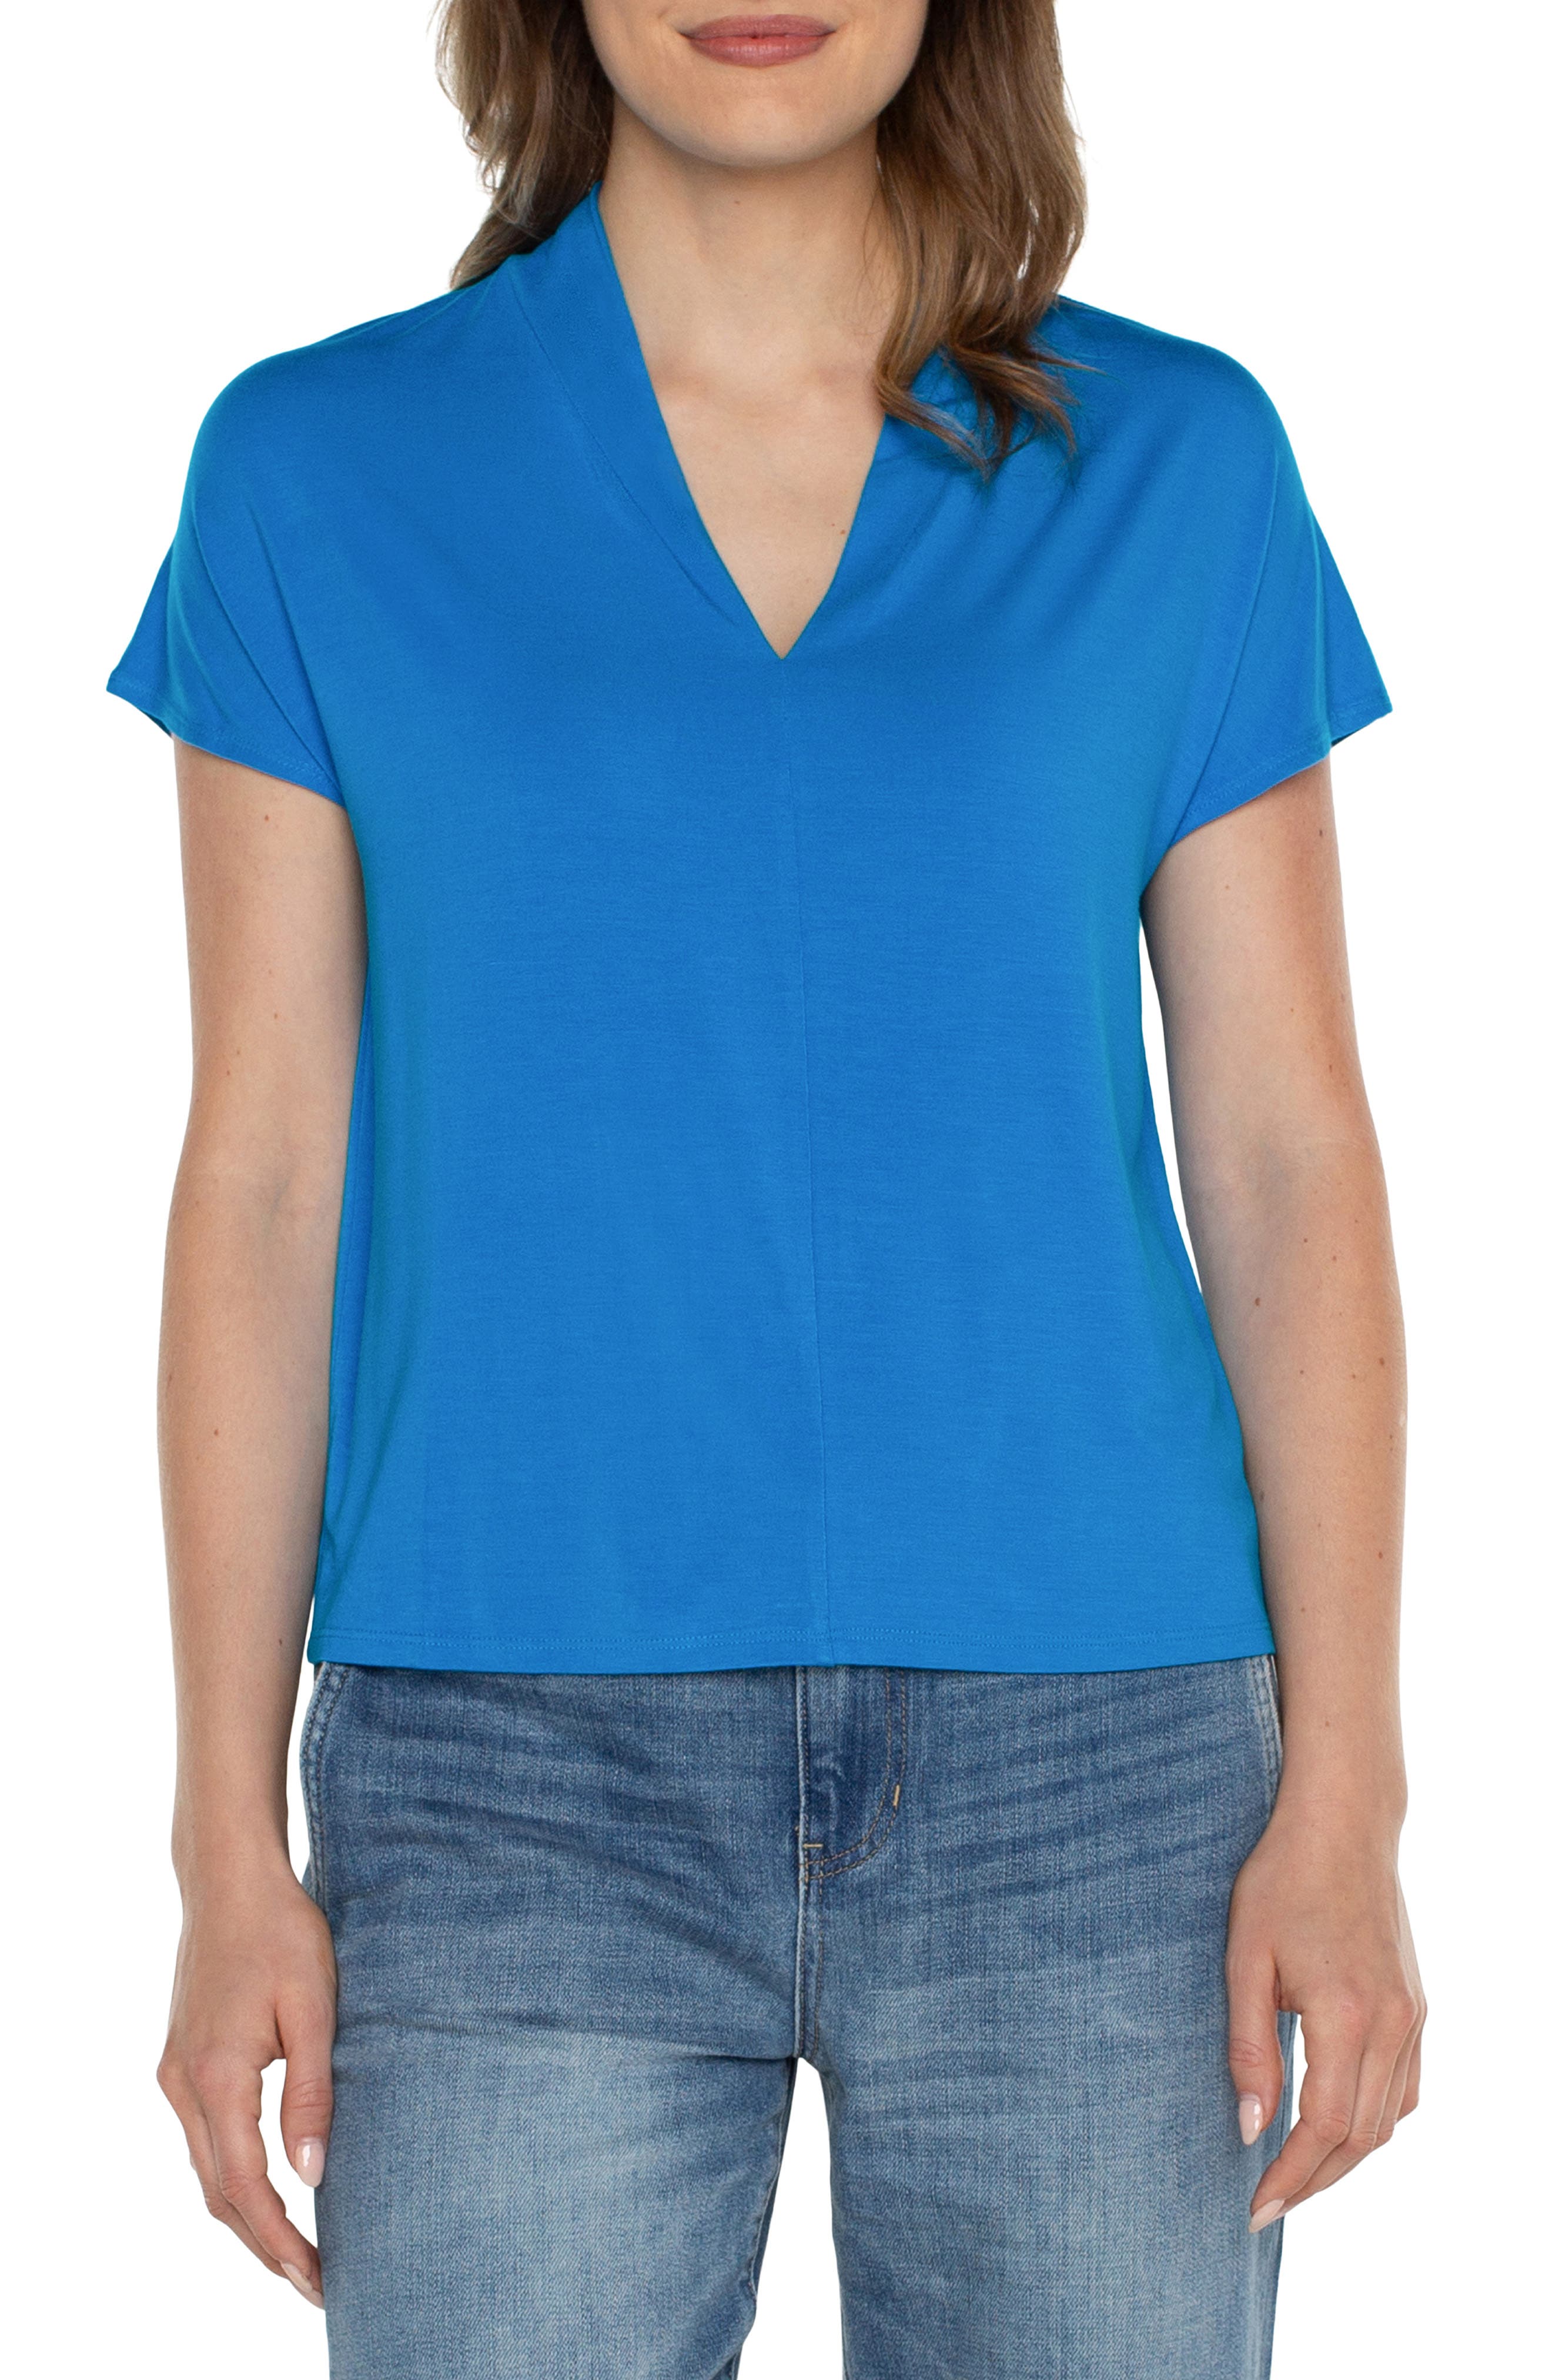 Striped dolman sleeve t-shirt with keyhole neckline - Light blue